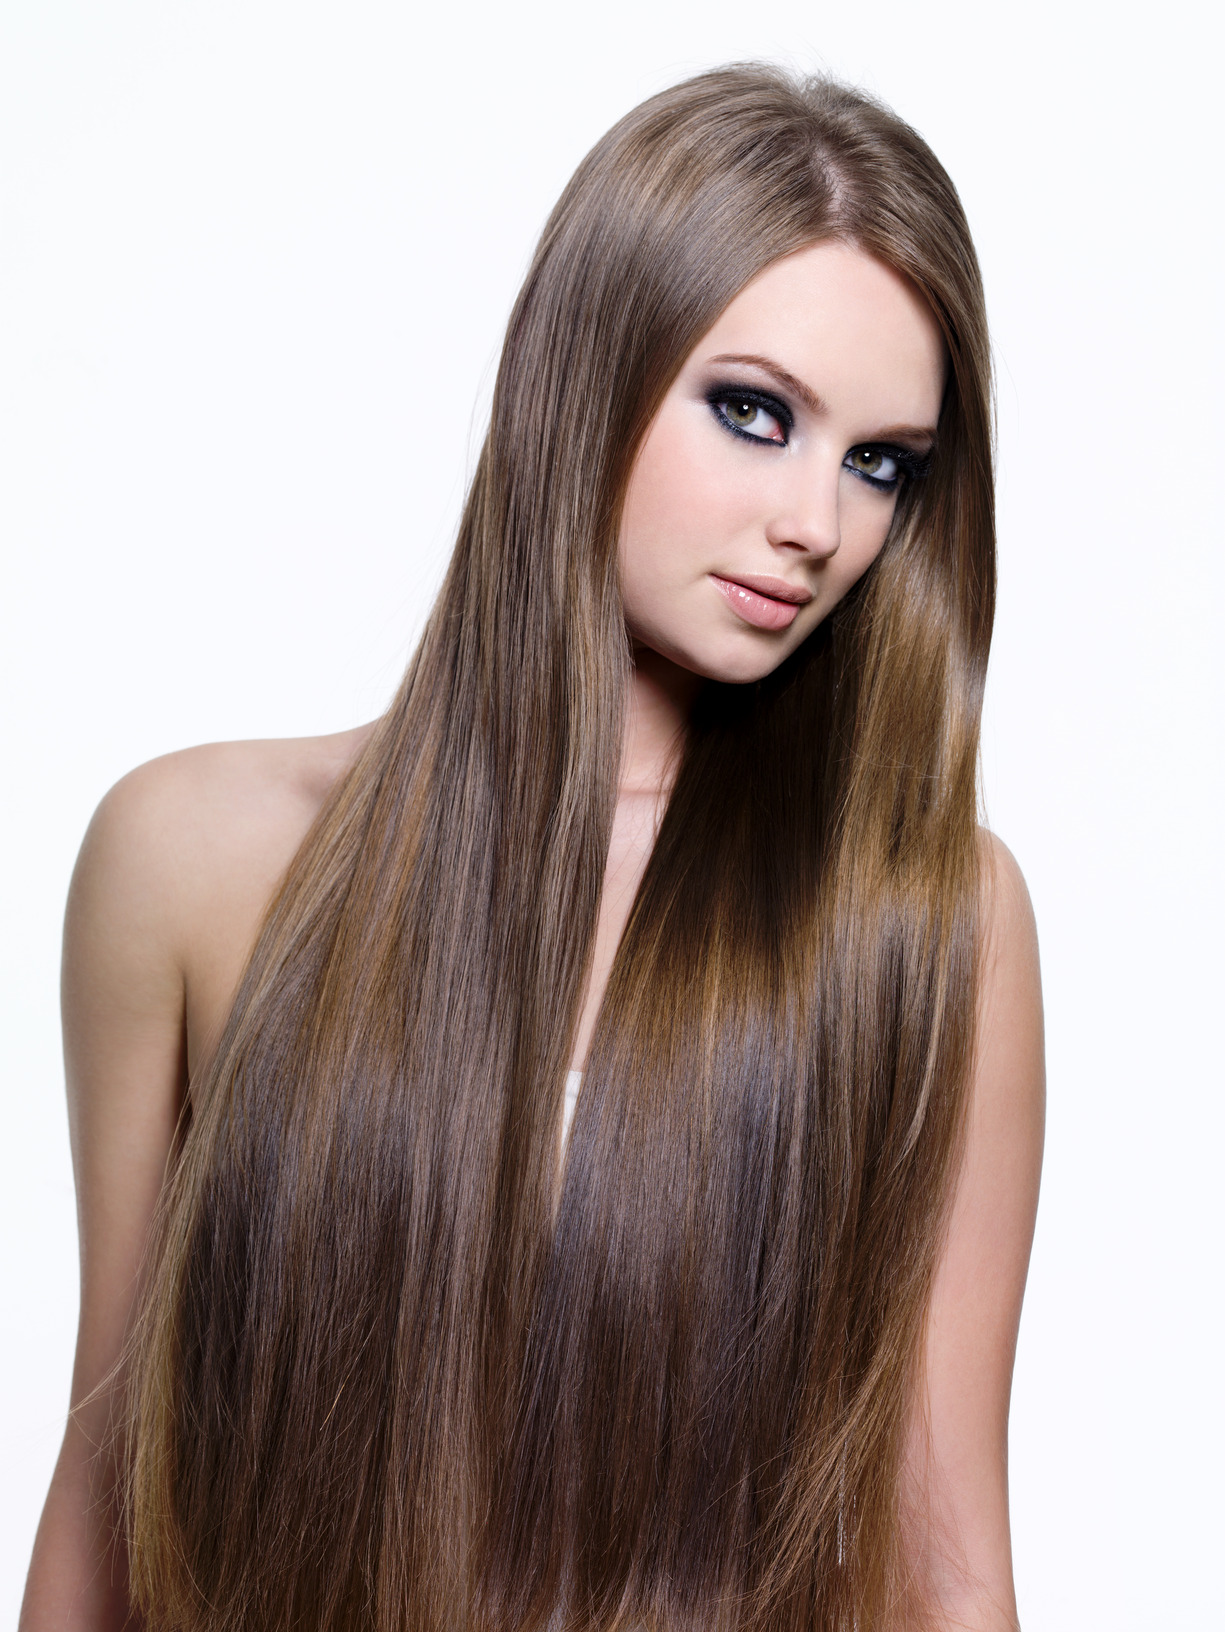 photodune-2296473-beauty-of-long-healthy-hair-of-woman-m-2-